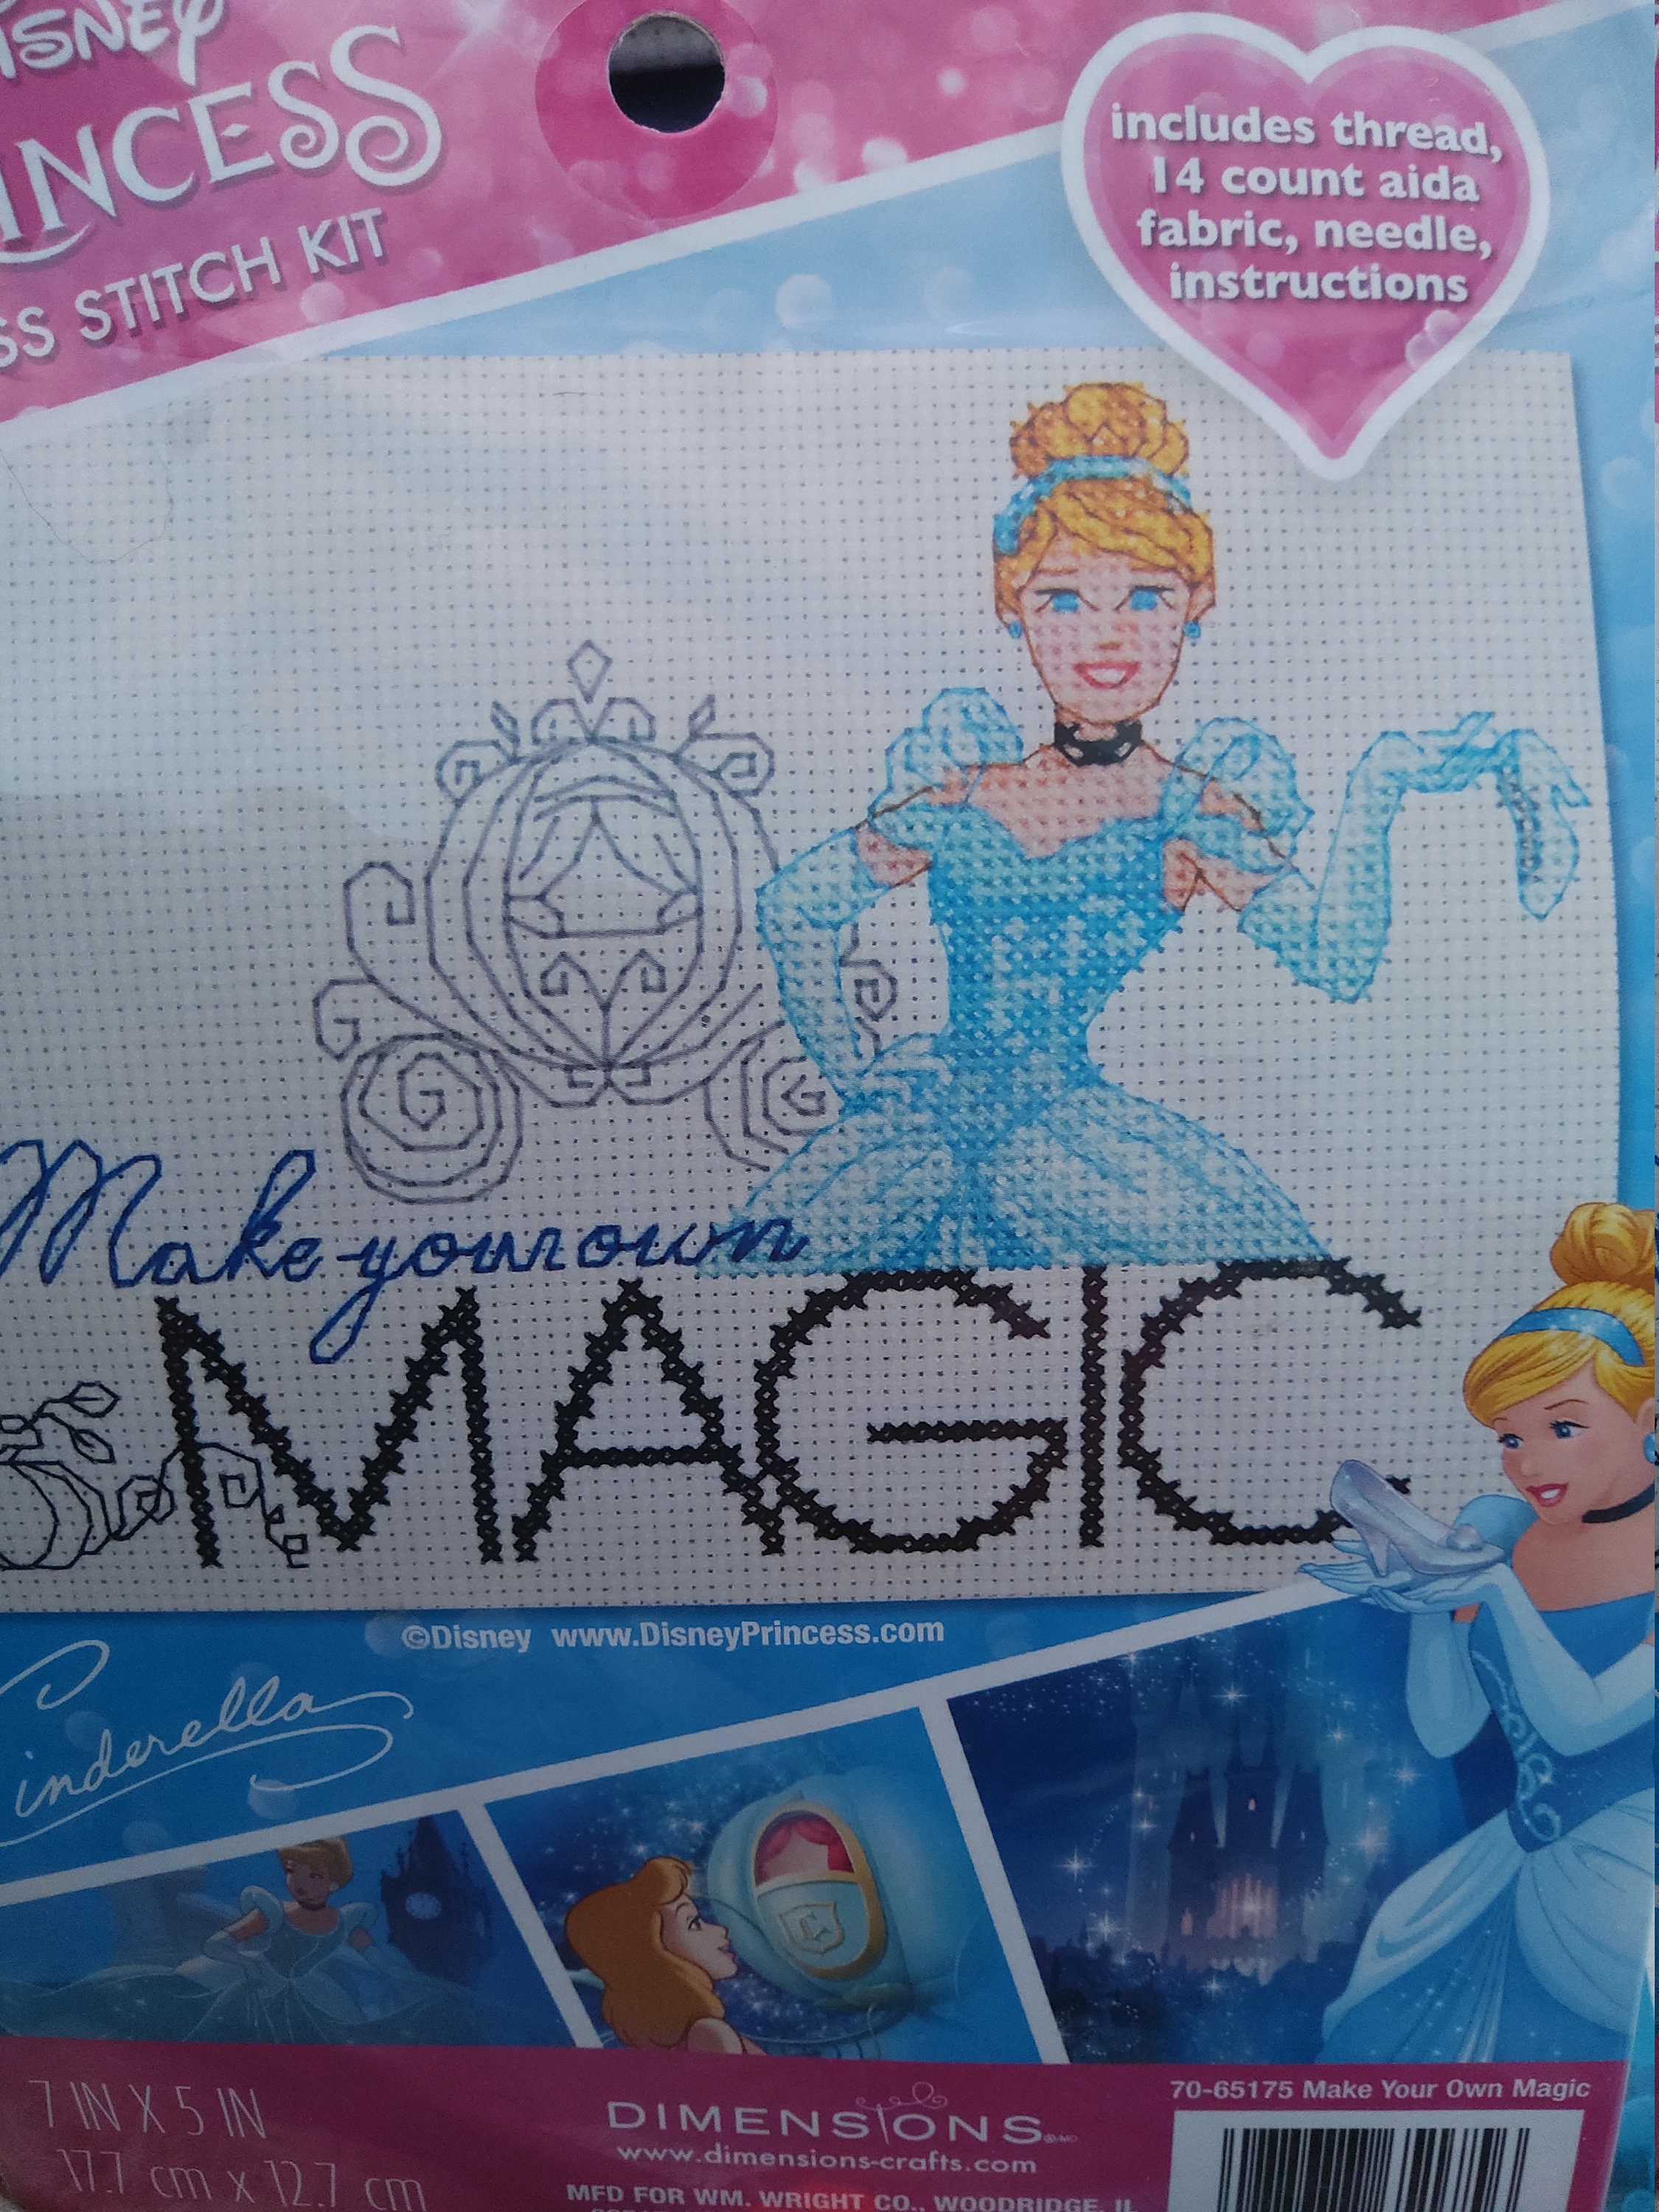 Make A Splash (14 Count) Disney Princess Counted Cross Stitch Kit 7x5 - Dimensions